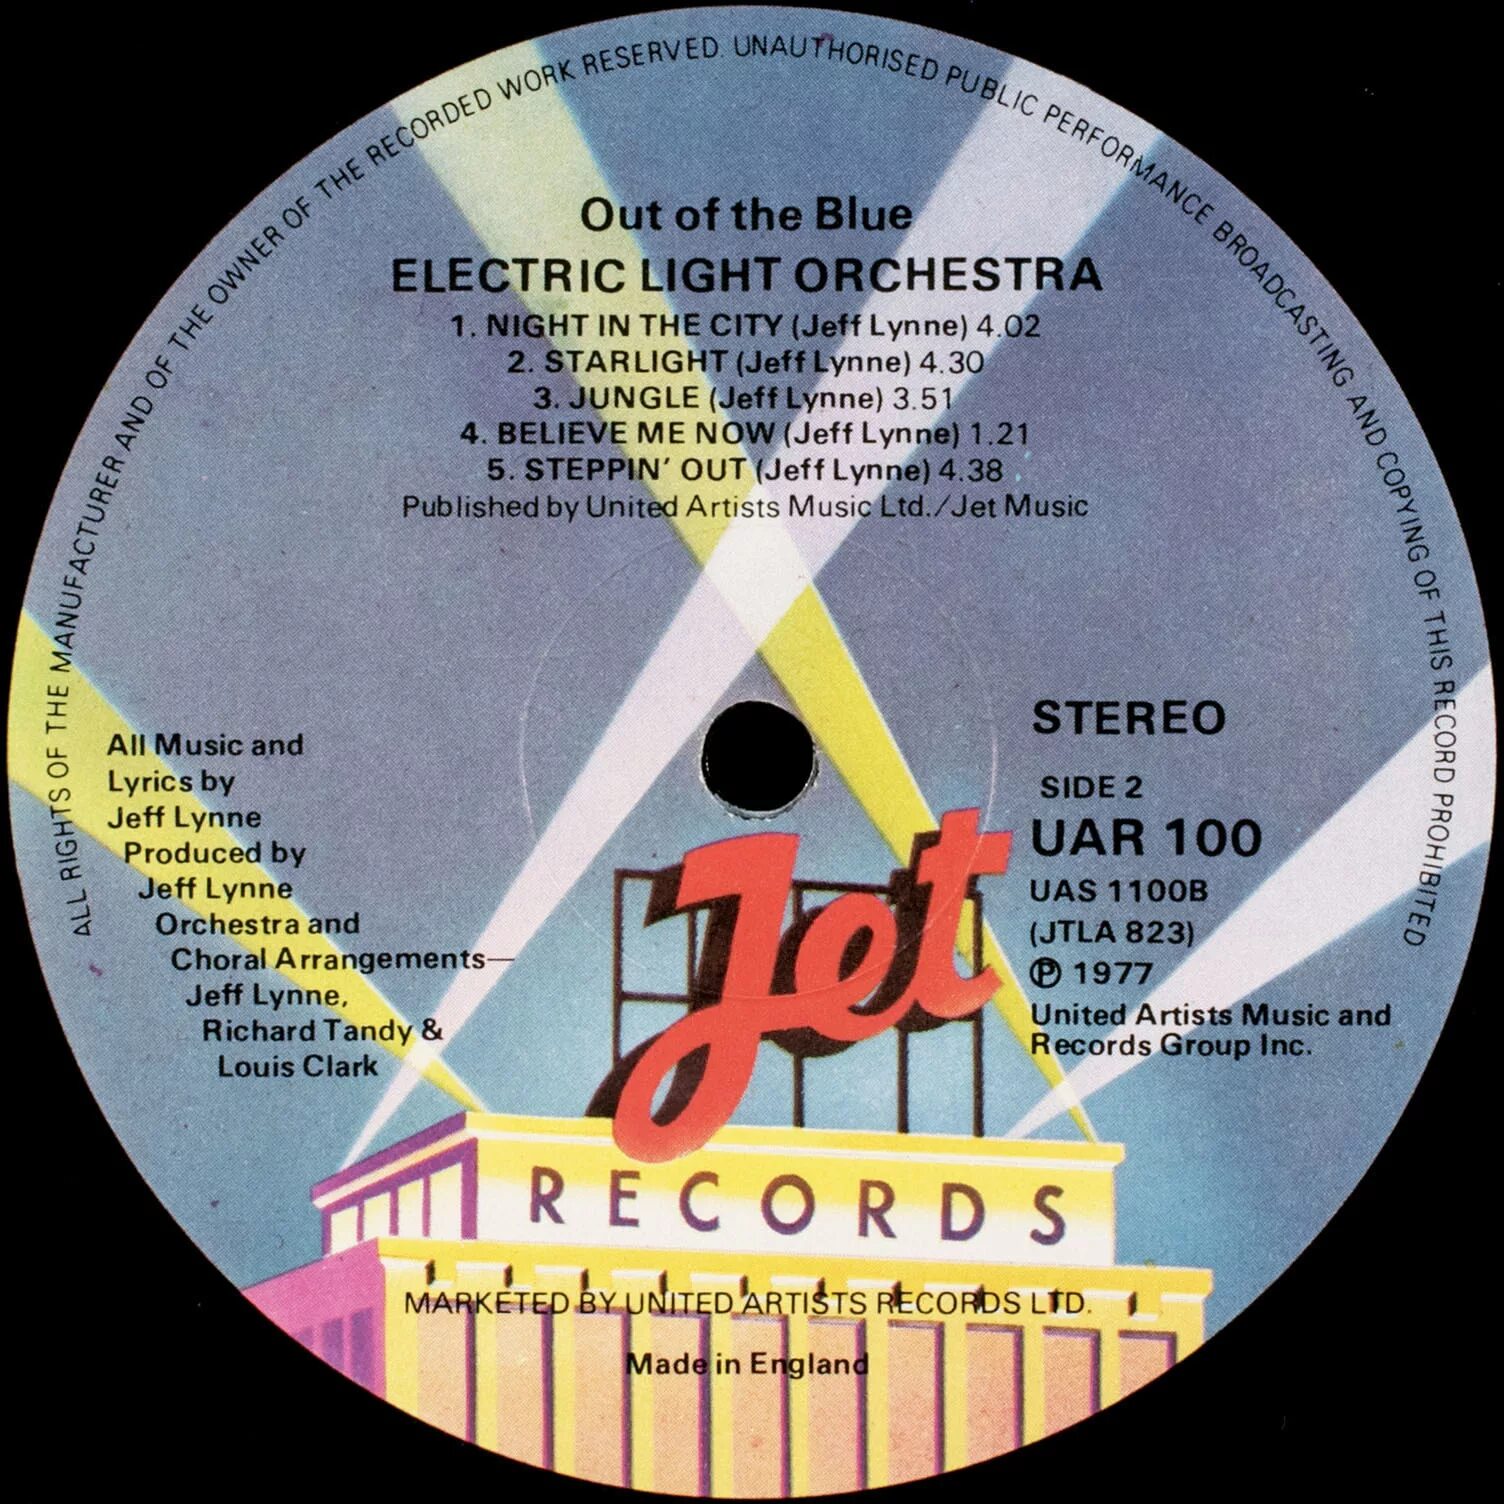 Blue light orchestra. Electric Light Orchestra Eldorado 1974. Electric Light Orchestra 1977. Electric Light Orchestra out of the Blue 1977. Electric Light Orchestra Eldorado LP.